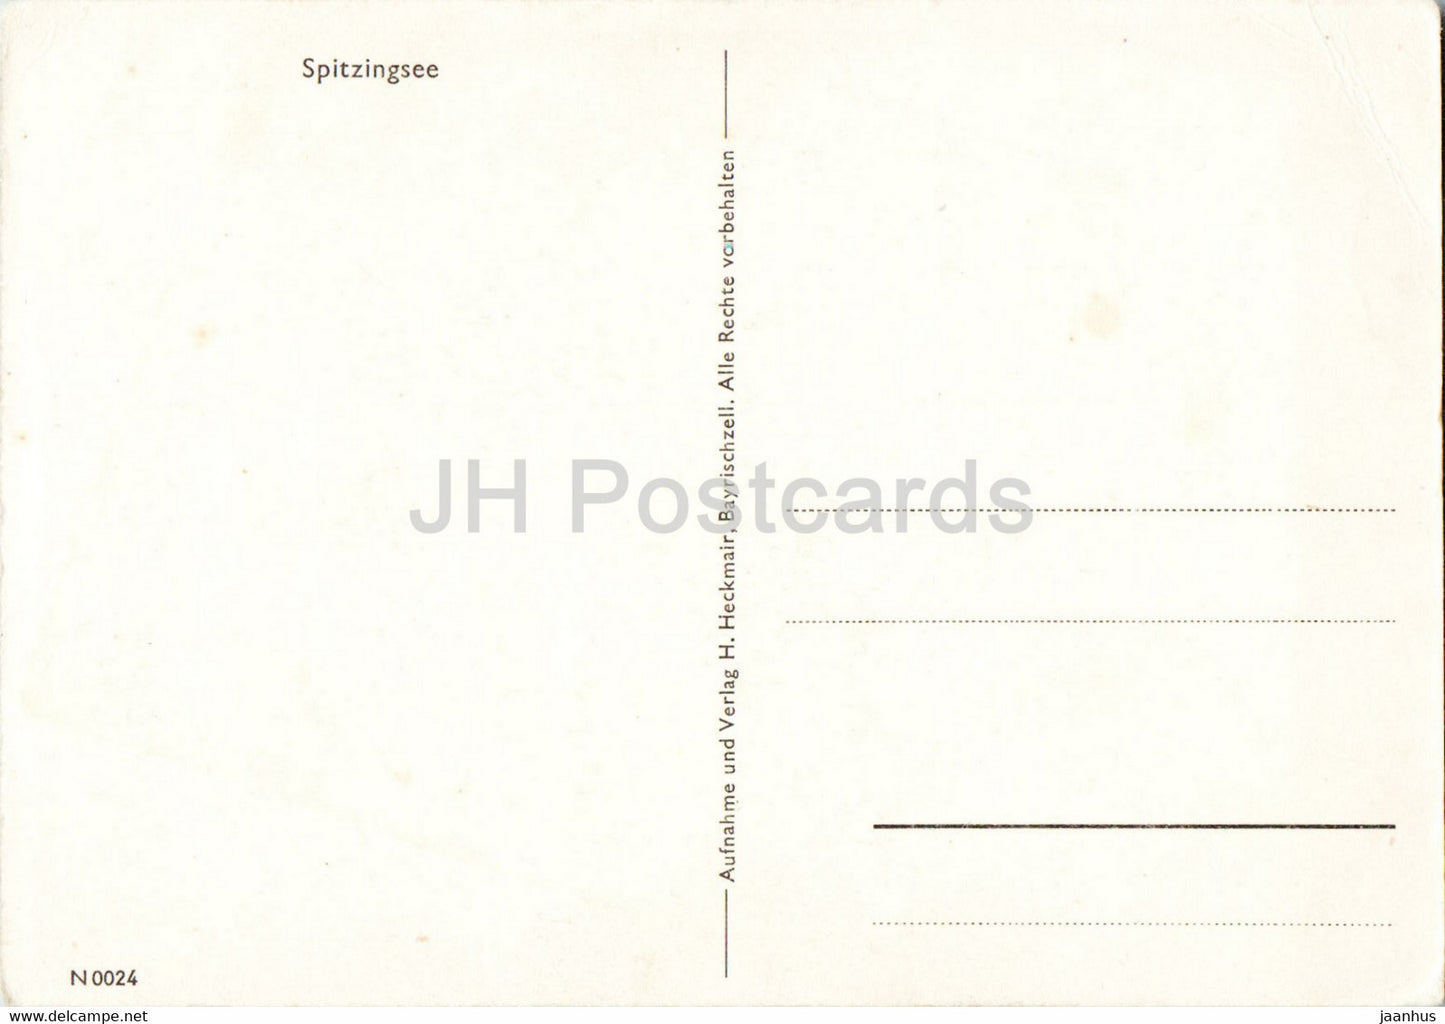 Spitzingsee - 0024 - carte postale ancienne - Allemagne - inutilisée